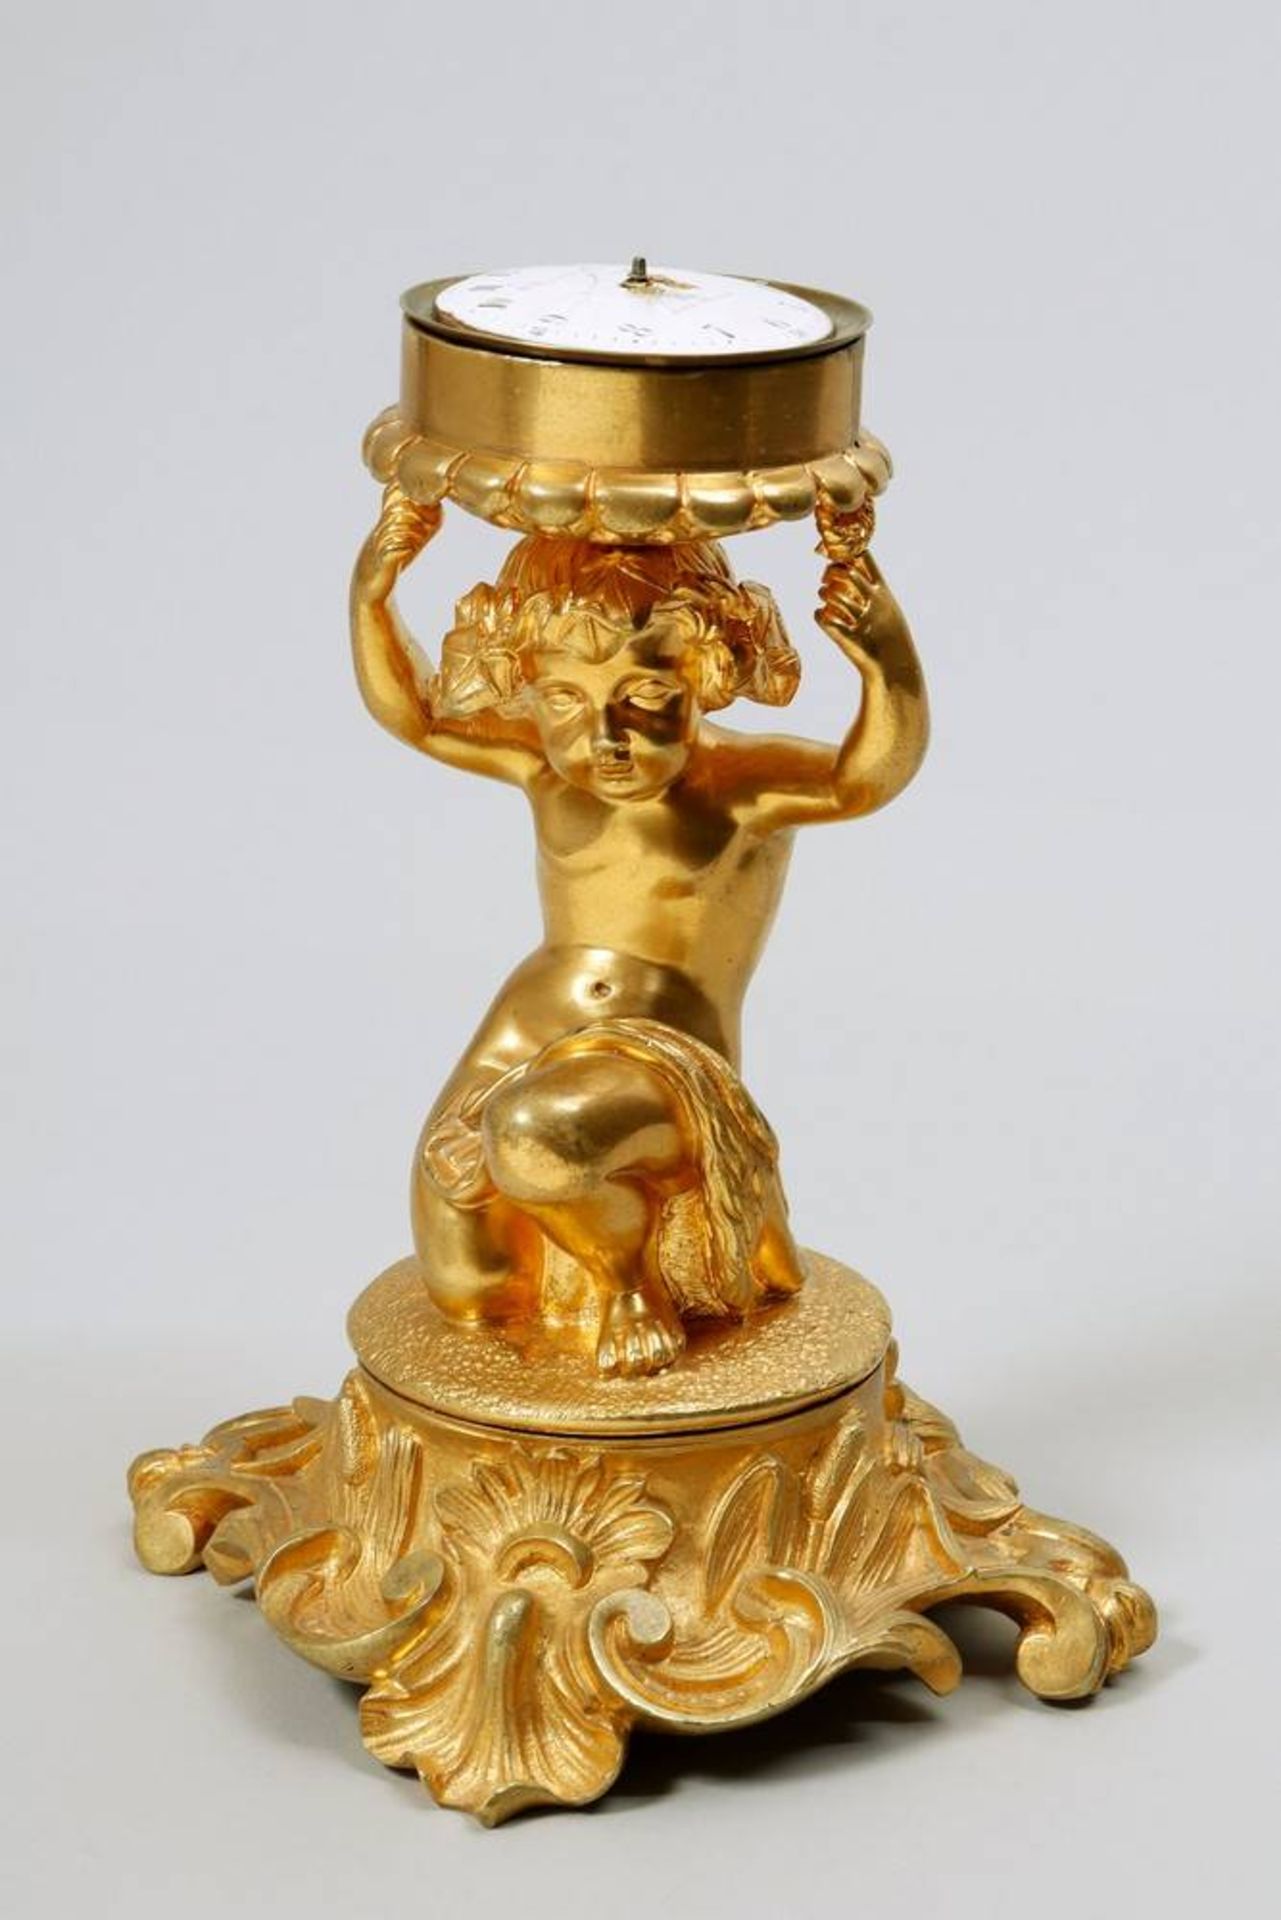 Napoleon III. table clock/watchholderHenri Picard (activ 1840-1890), gilt bronze, marked "PICARD",